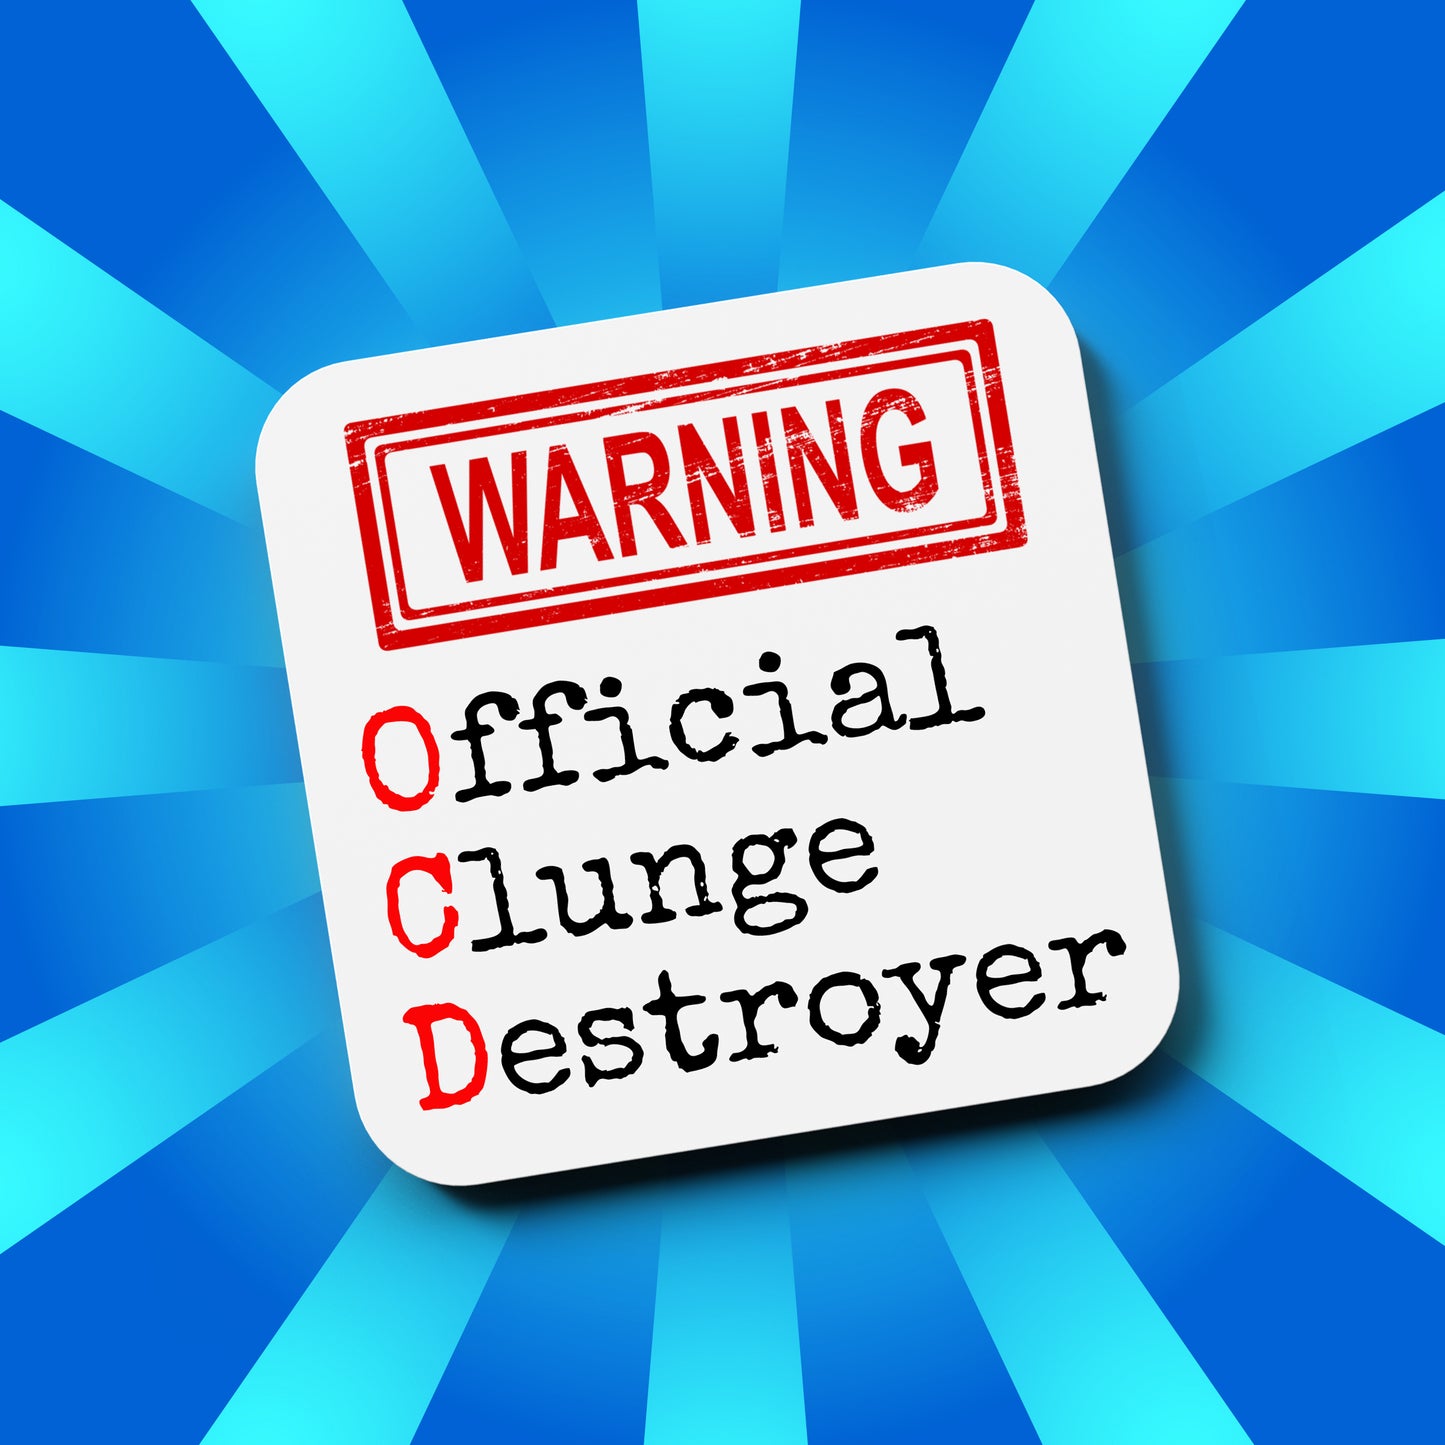 WARNING Official Clunge Destroyer